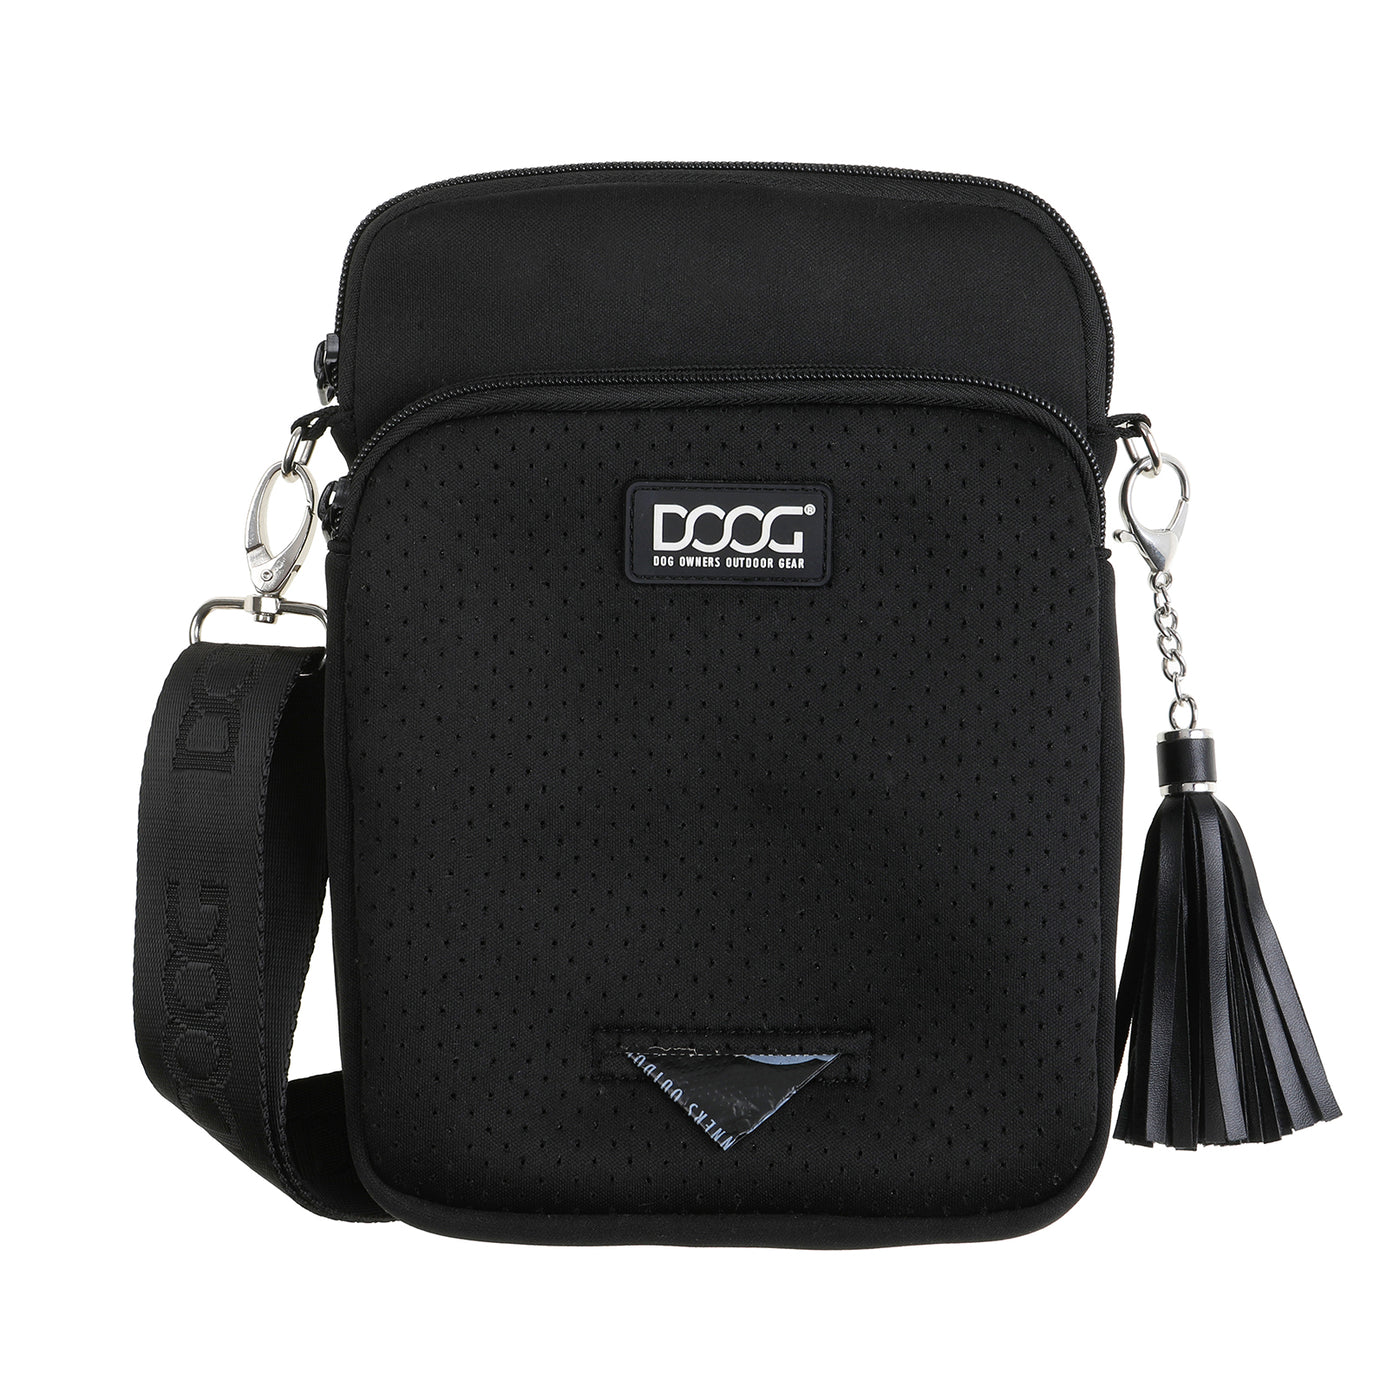 Neosport Walkie Bag - Black